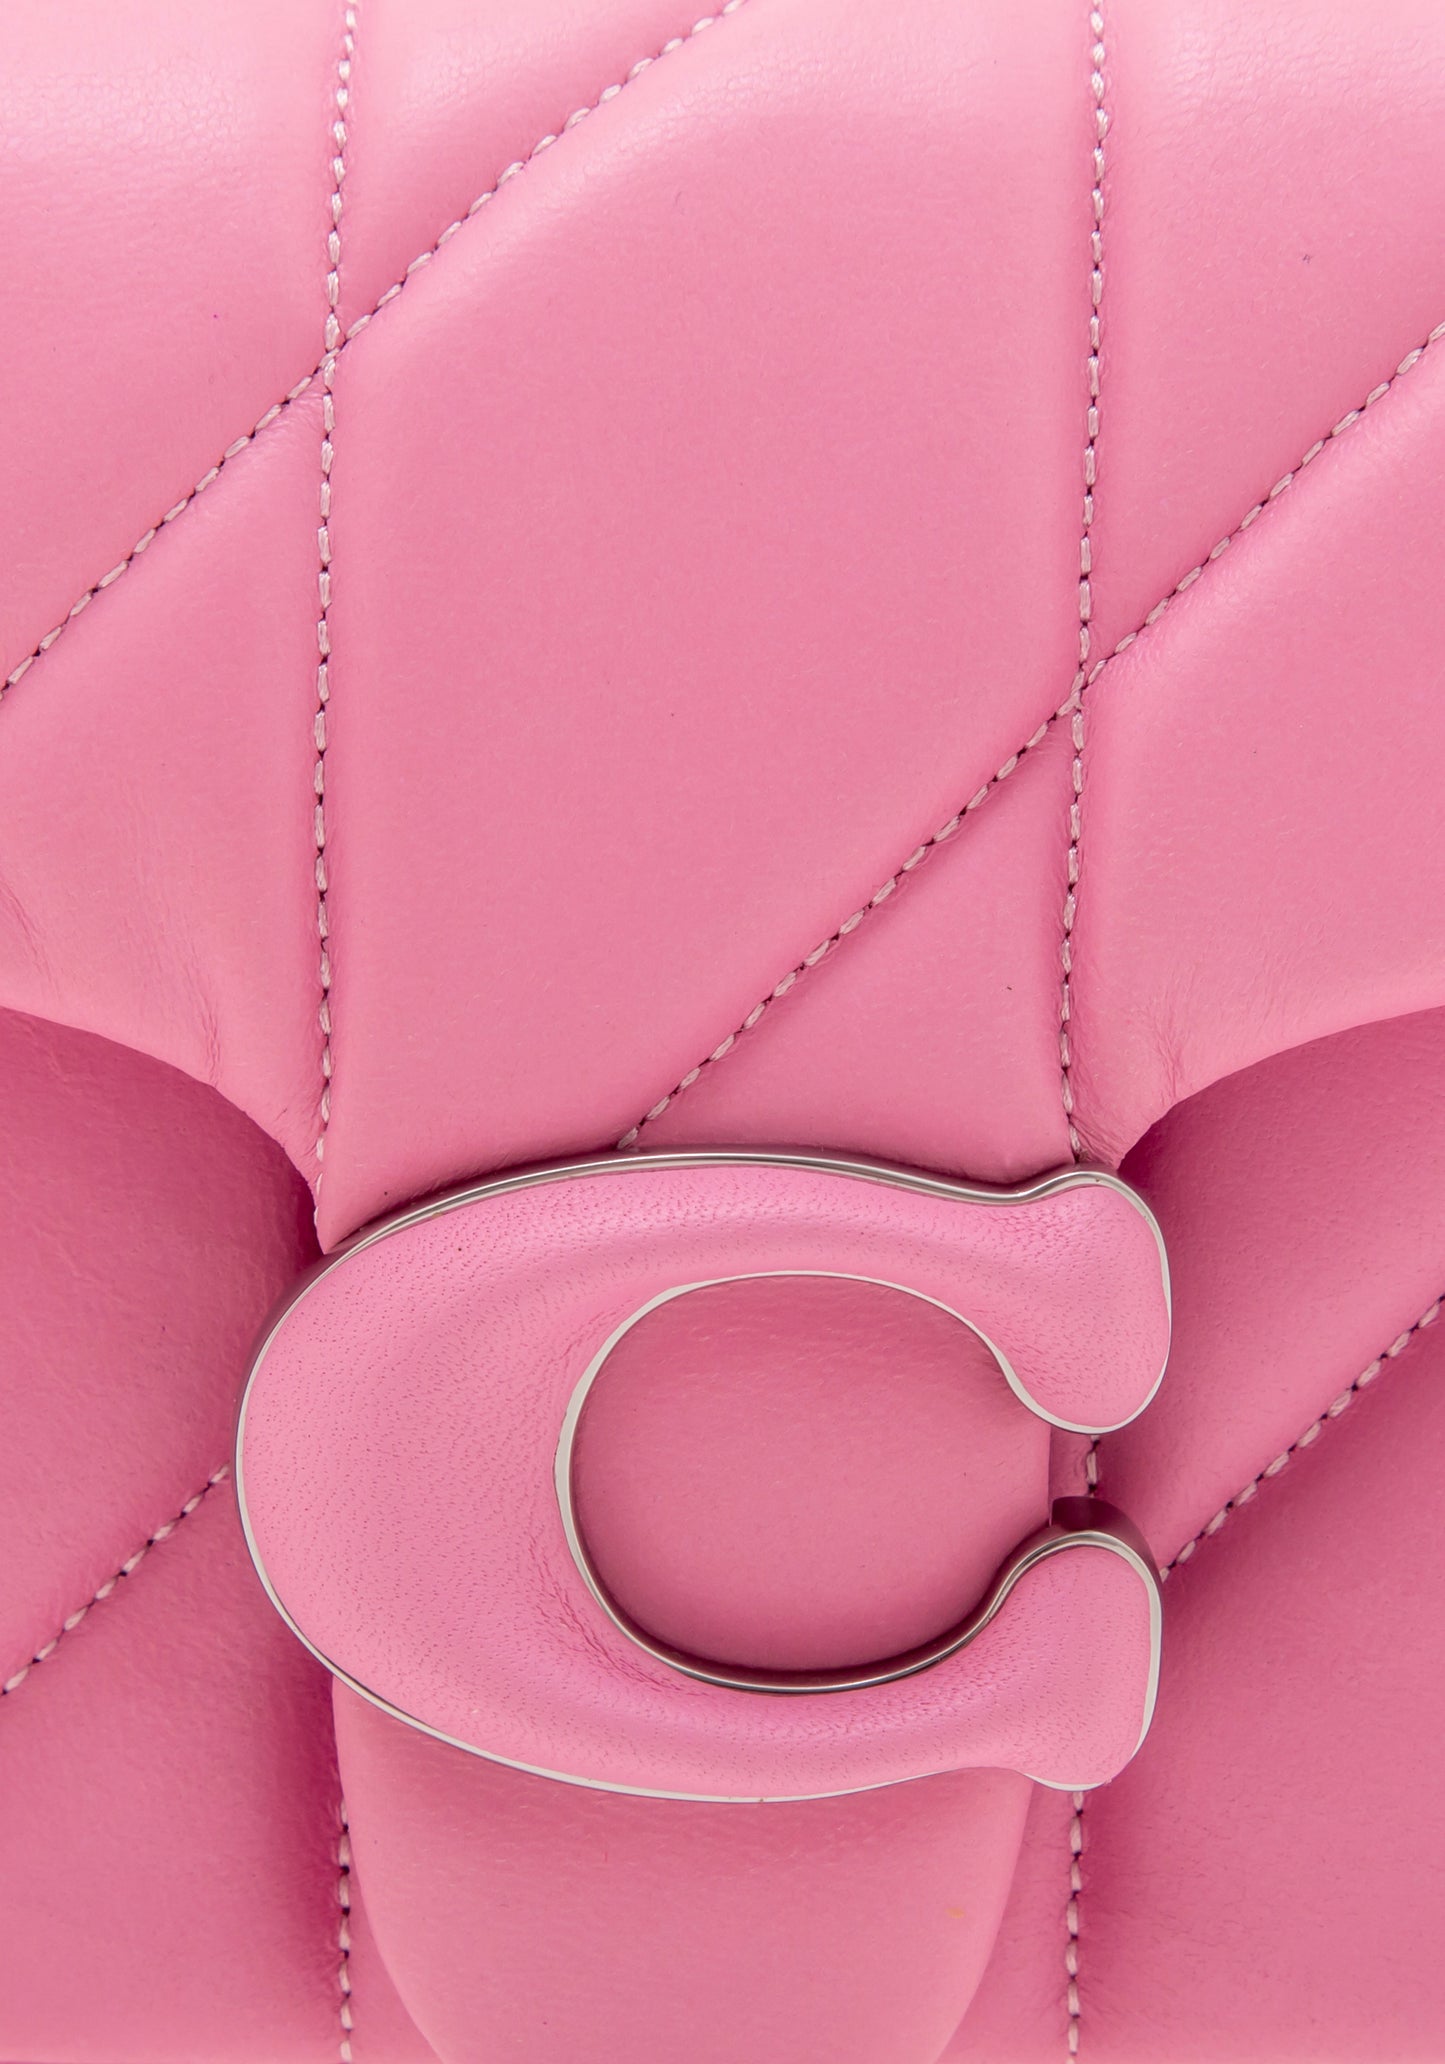 Tabby Quilted Shoulder Bag vivid pink | Bildmaterial bereitgestellt von SHOES.PLEASE.